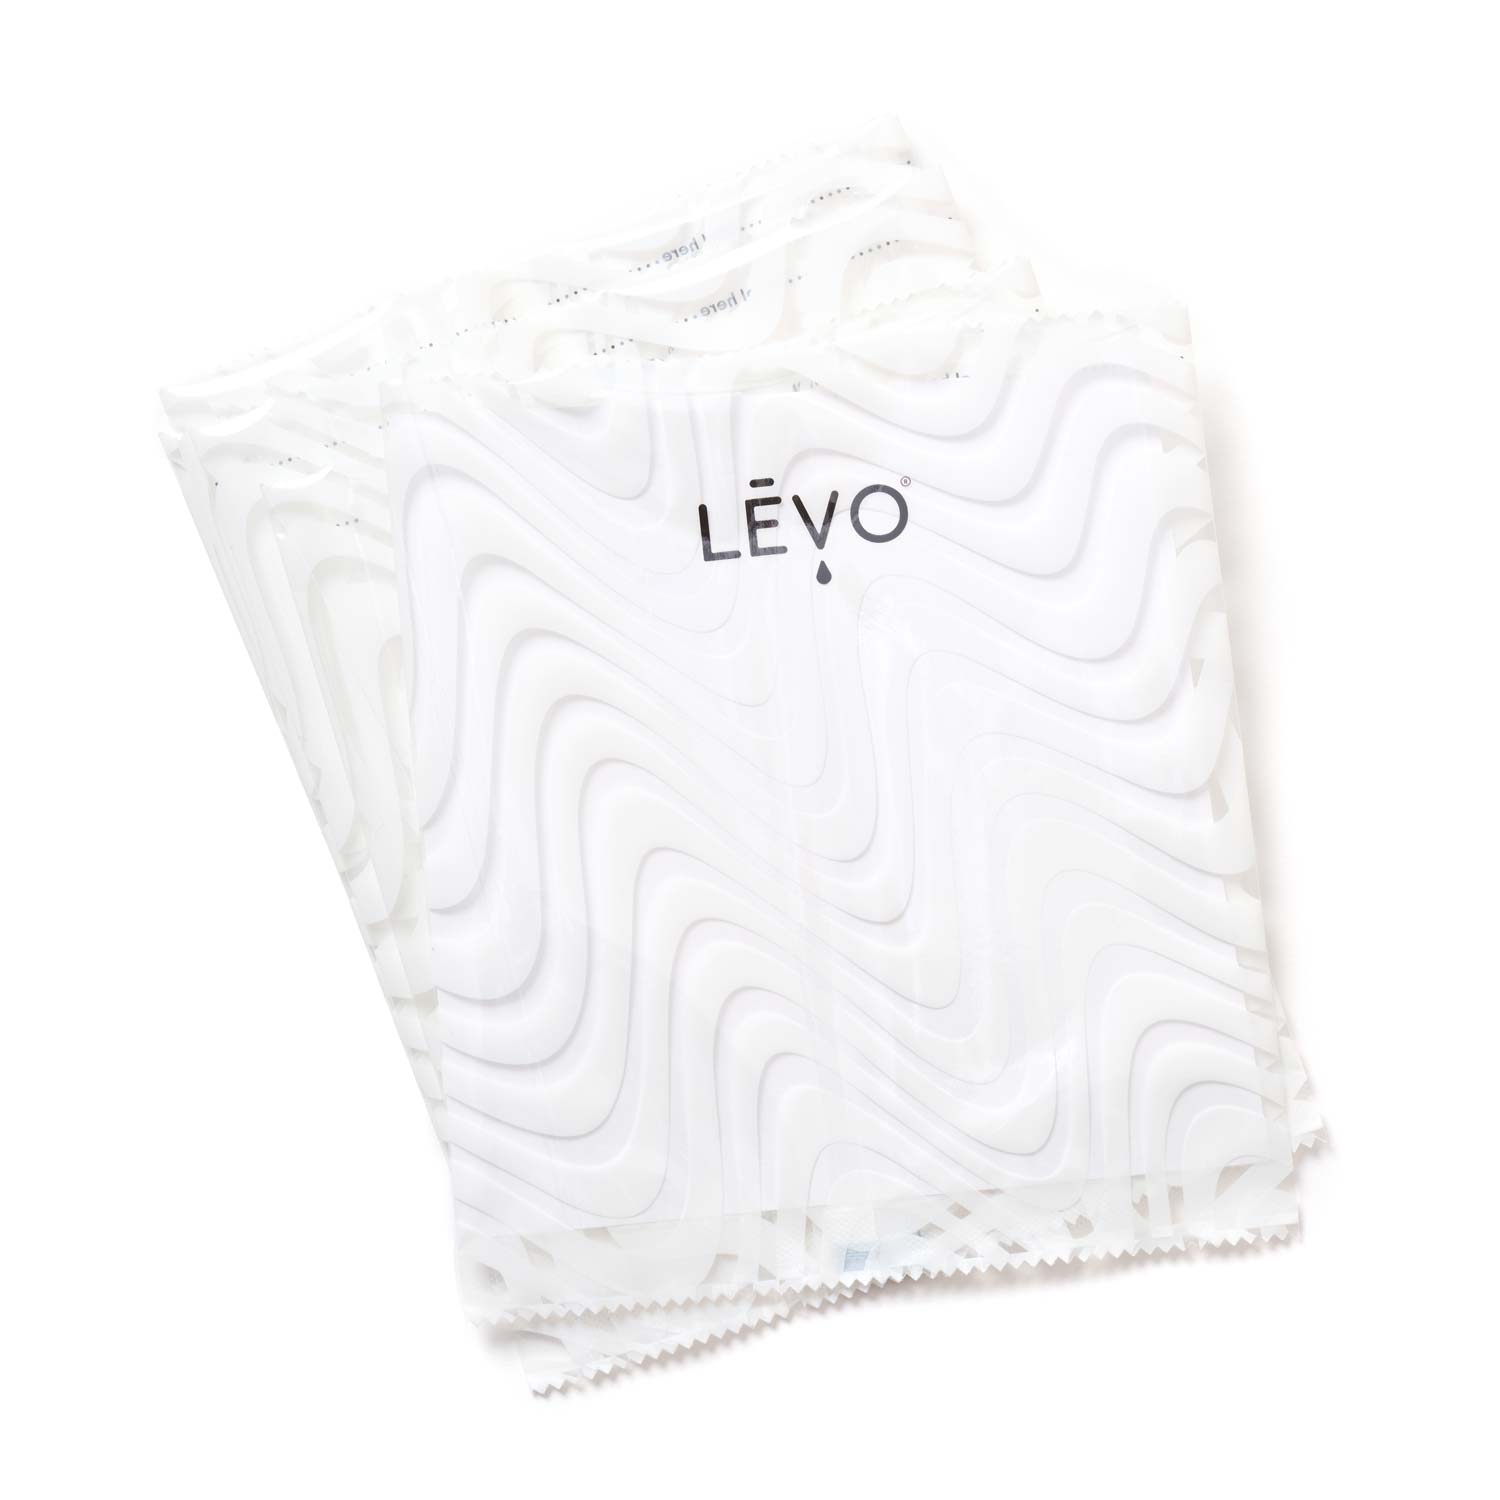 LEVO oil wrap refills large in white